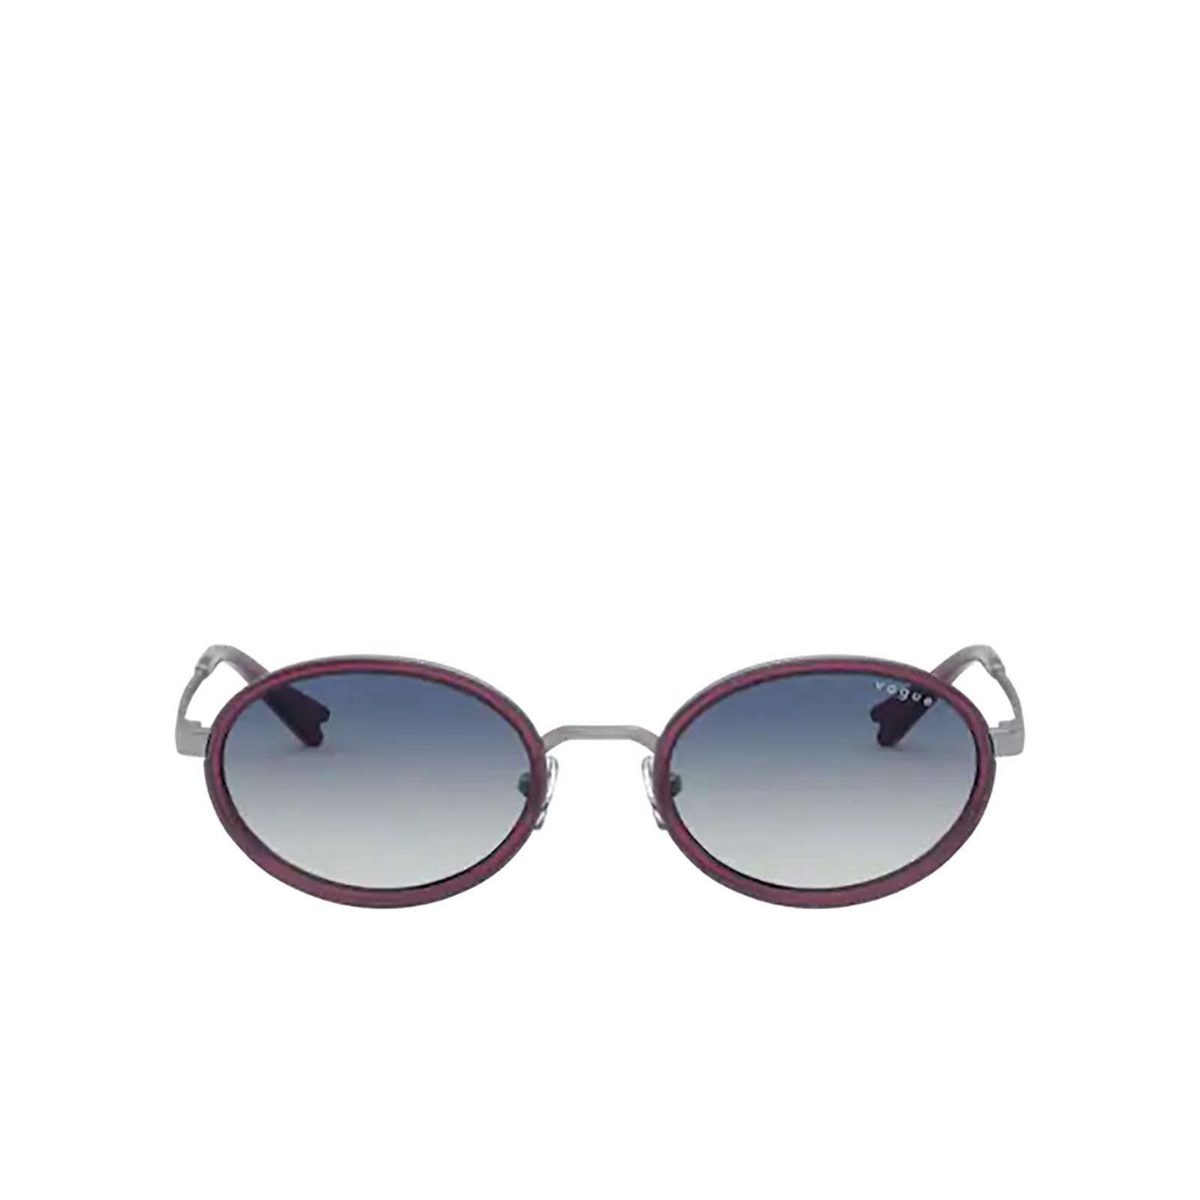 Vogue® Oval Sunglasses: VO4167S color Gunmetal 548/4L - front view.